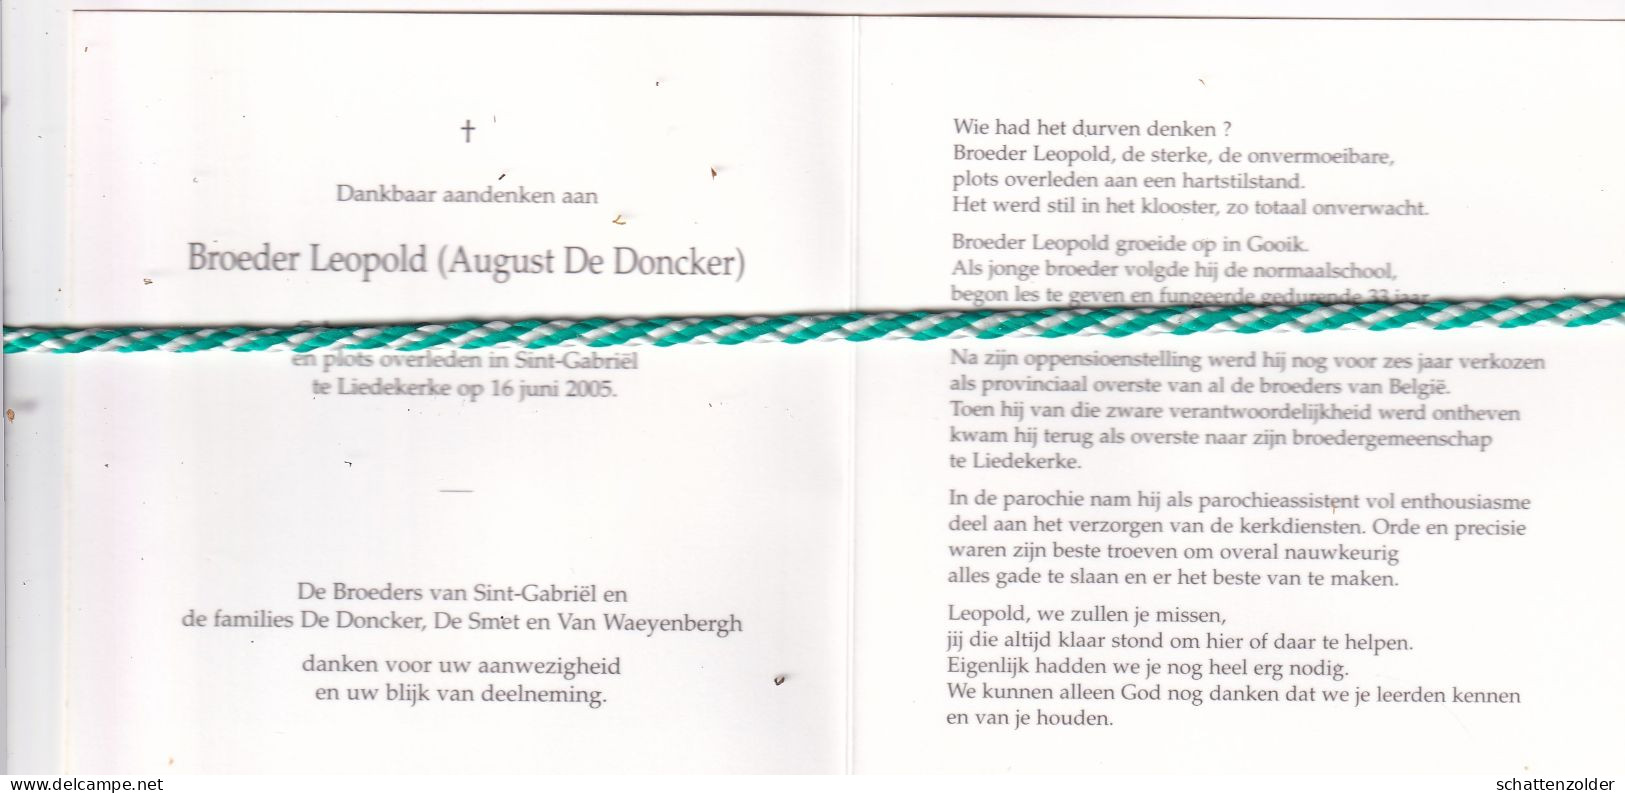 Broeder Leopold (August De Doncker), Gooik 1931, Liedekerke 2005. Foto - Esquela